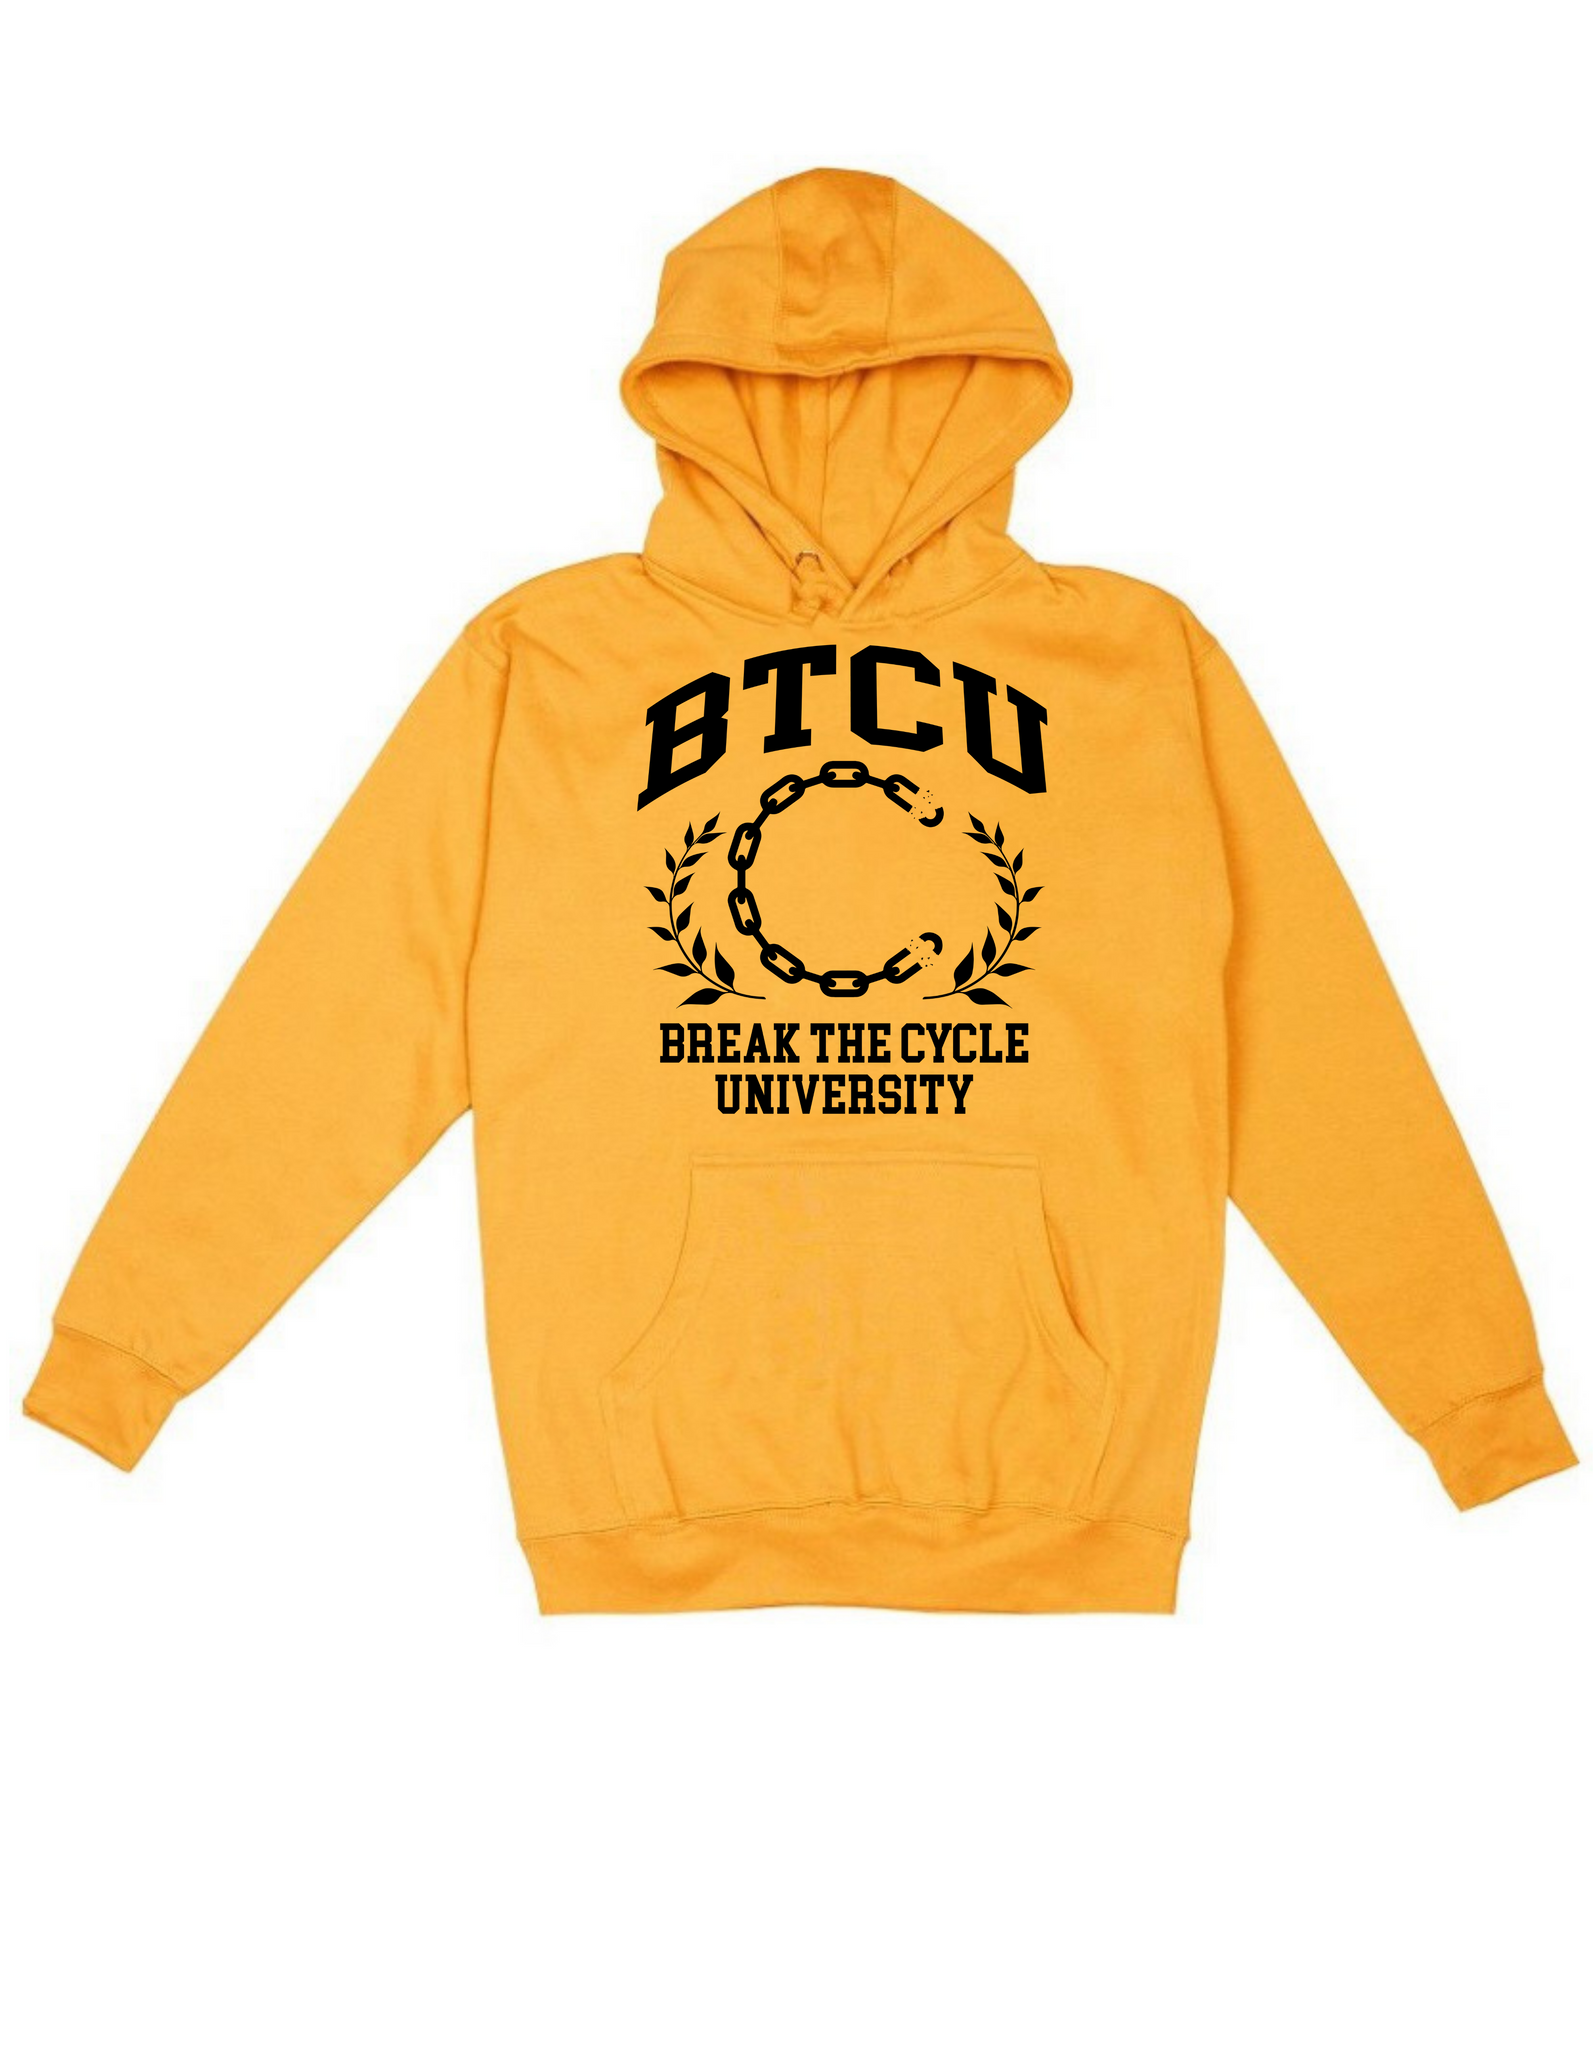 Gold BTC University Hoodie